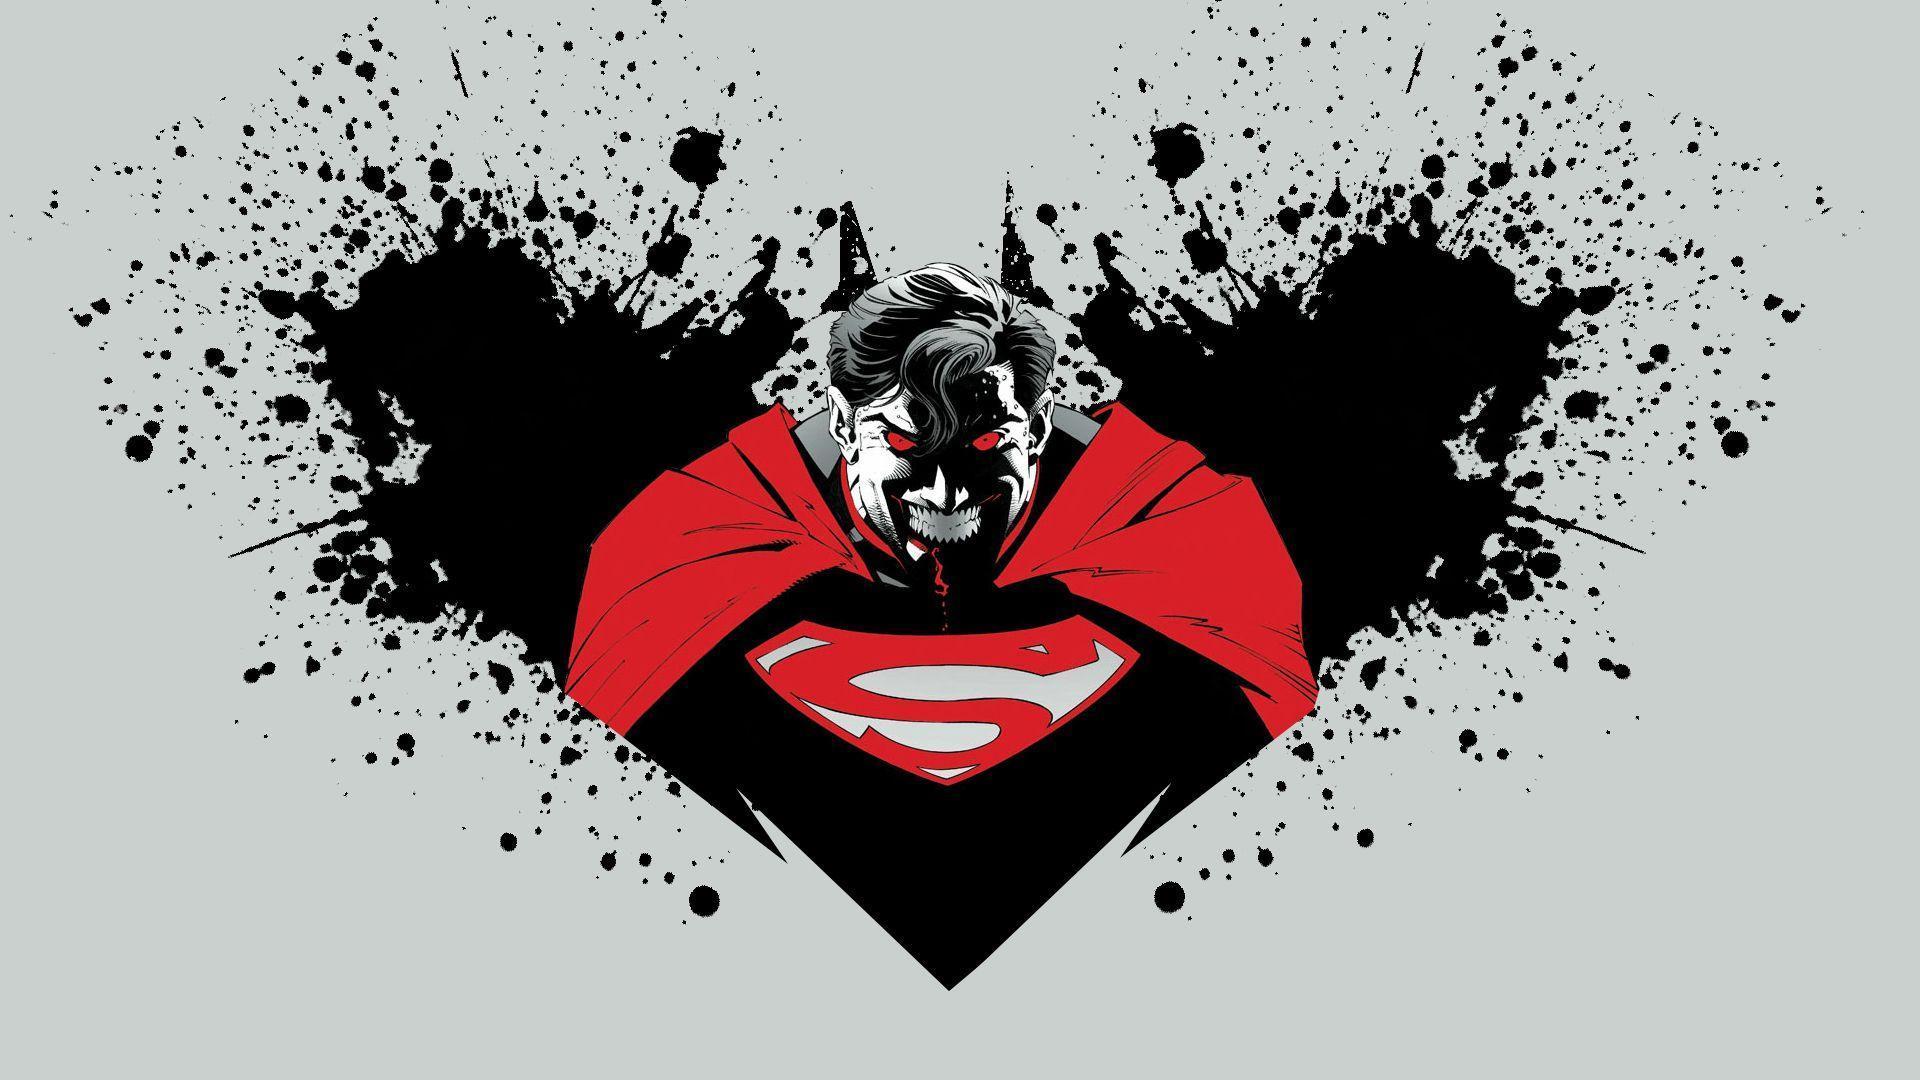 Batman vs Superman Logo Wallpaper: Find best latest Batman vs